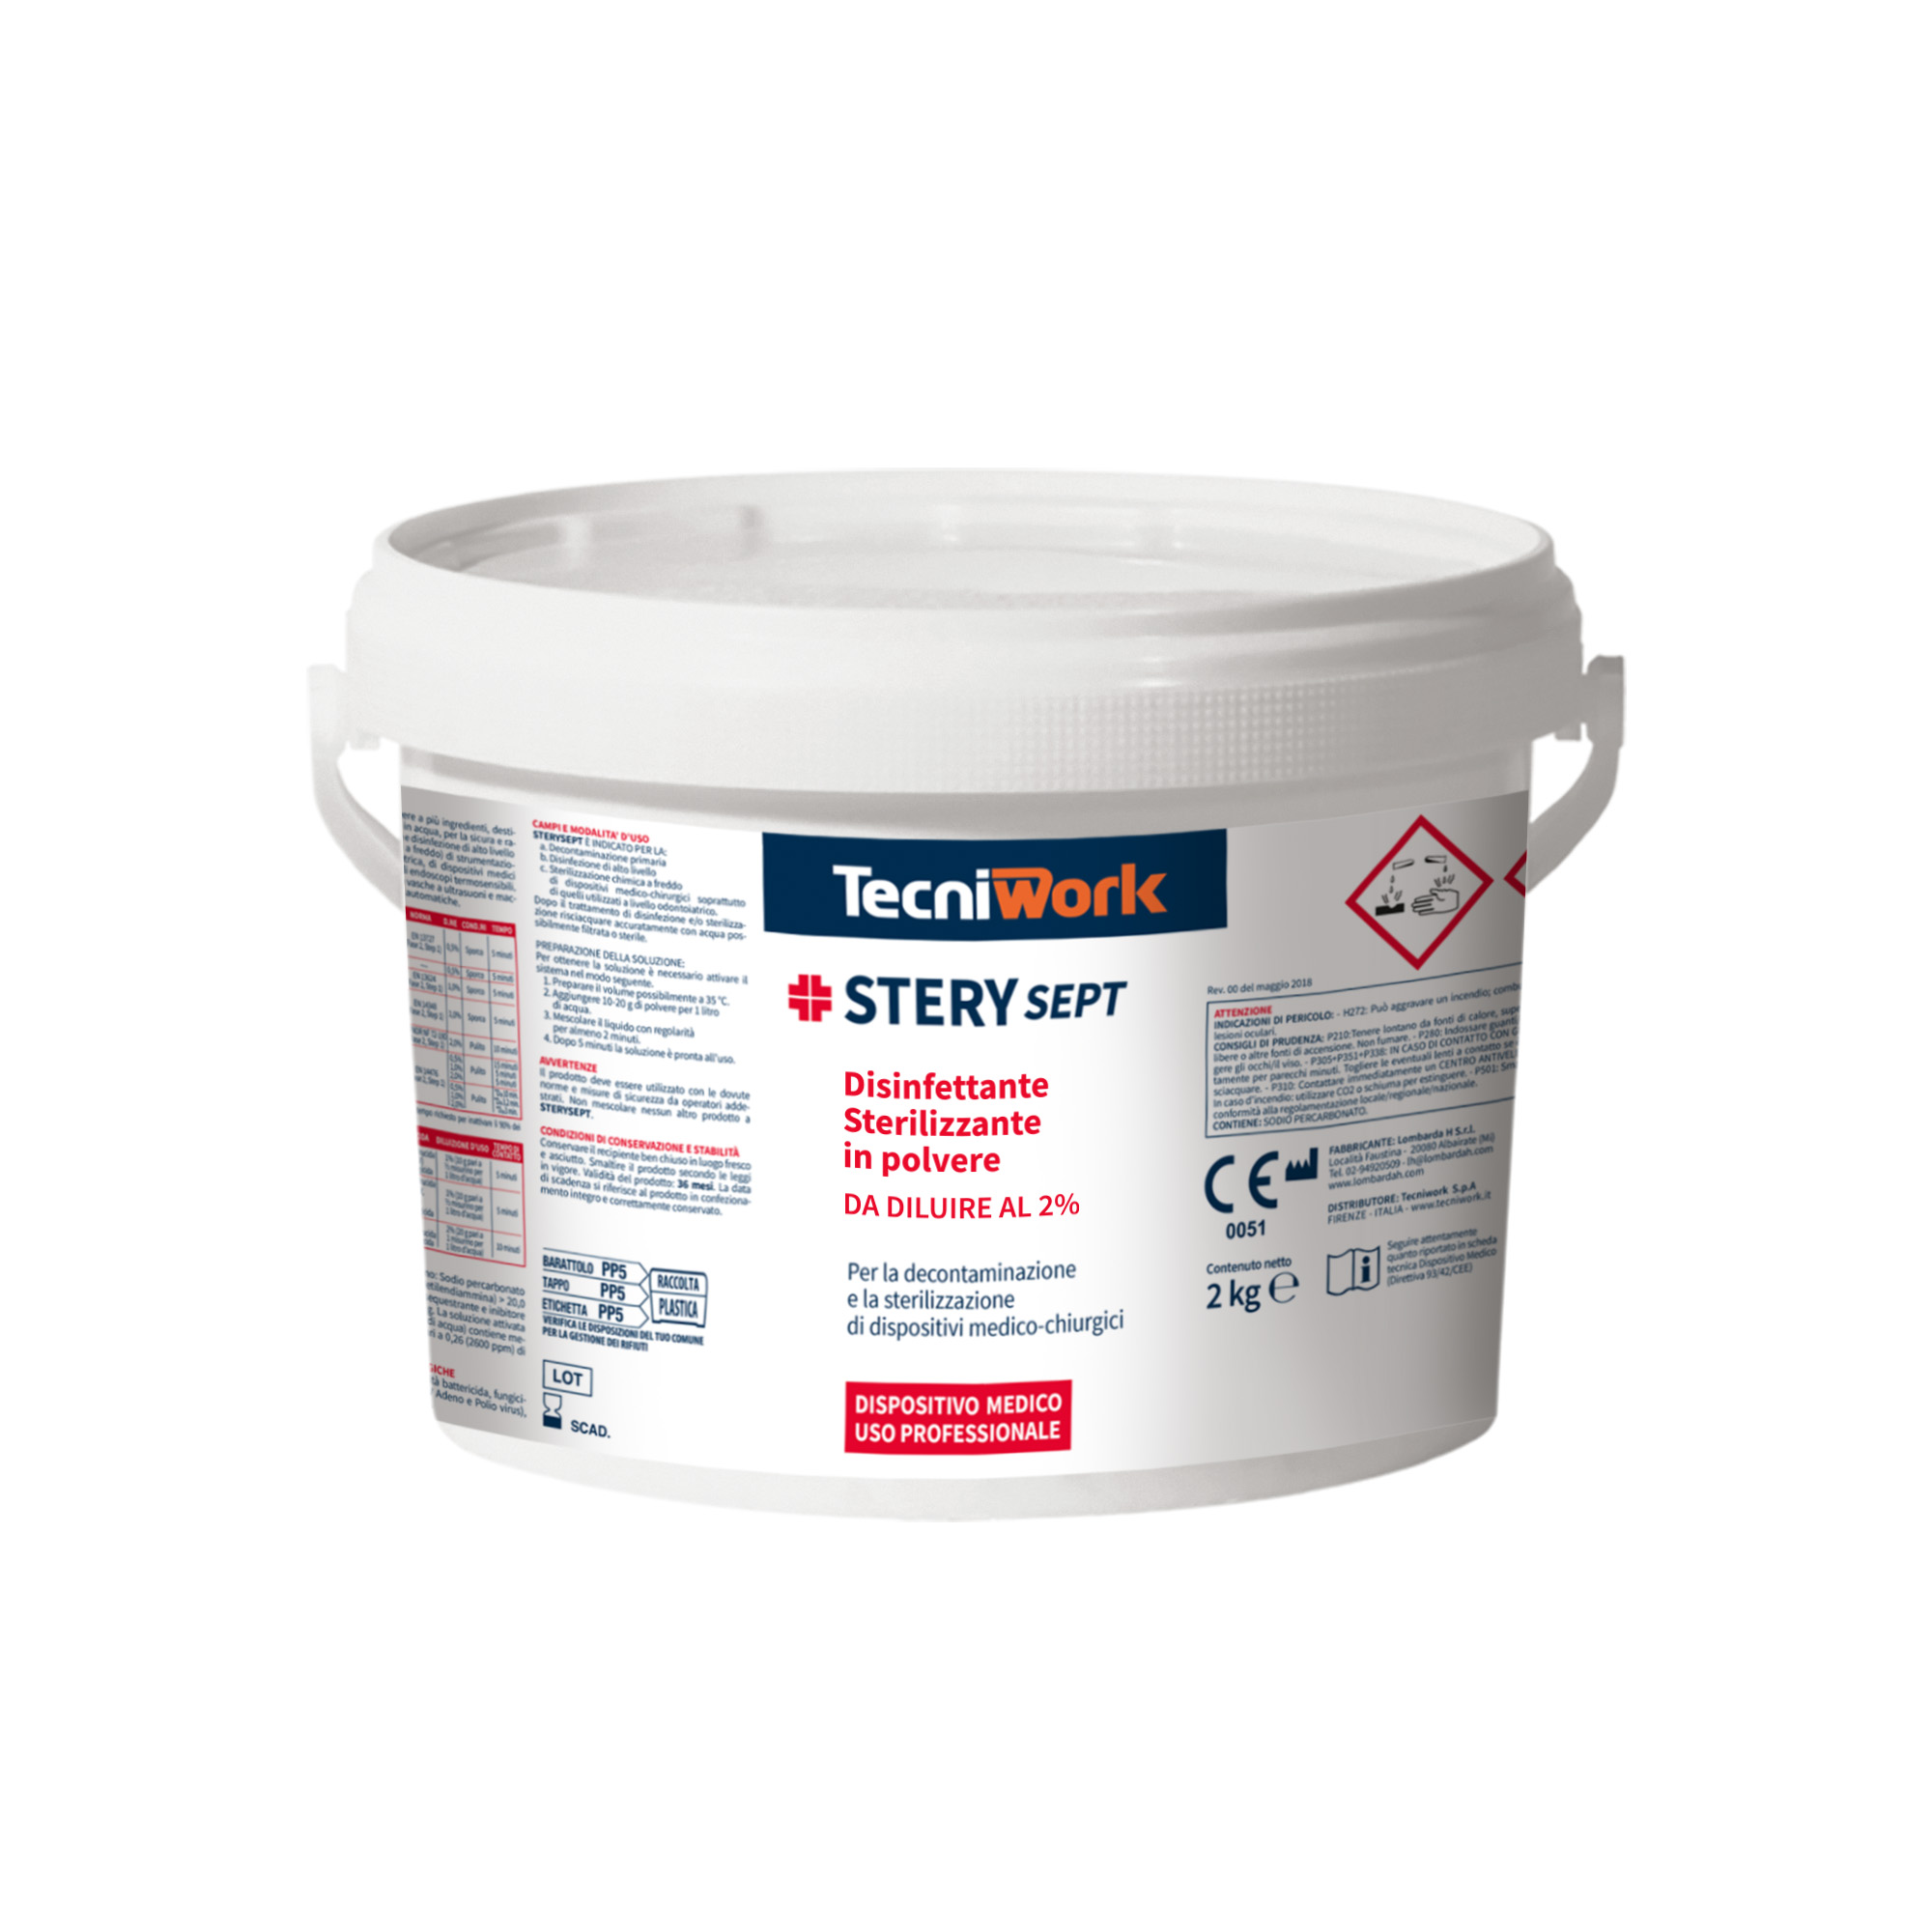 Decontaminant, disinfectant and cold steriliser for instruments Sterysept 2 kg